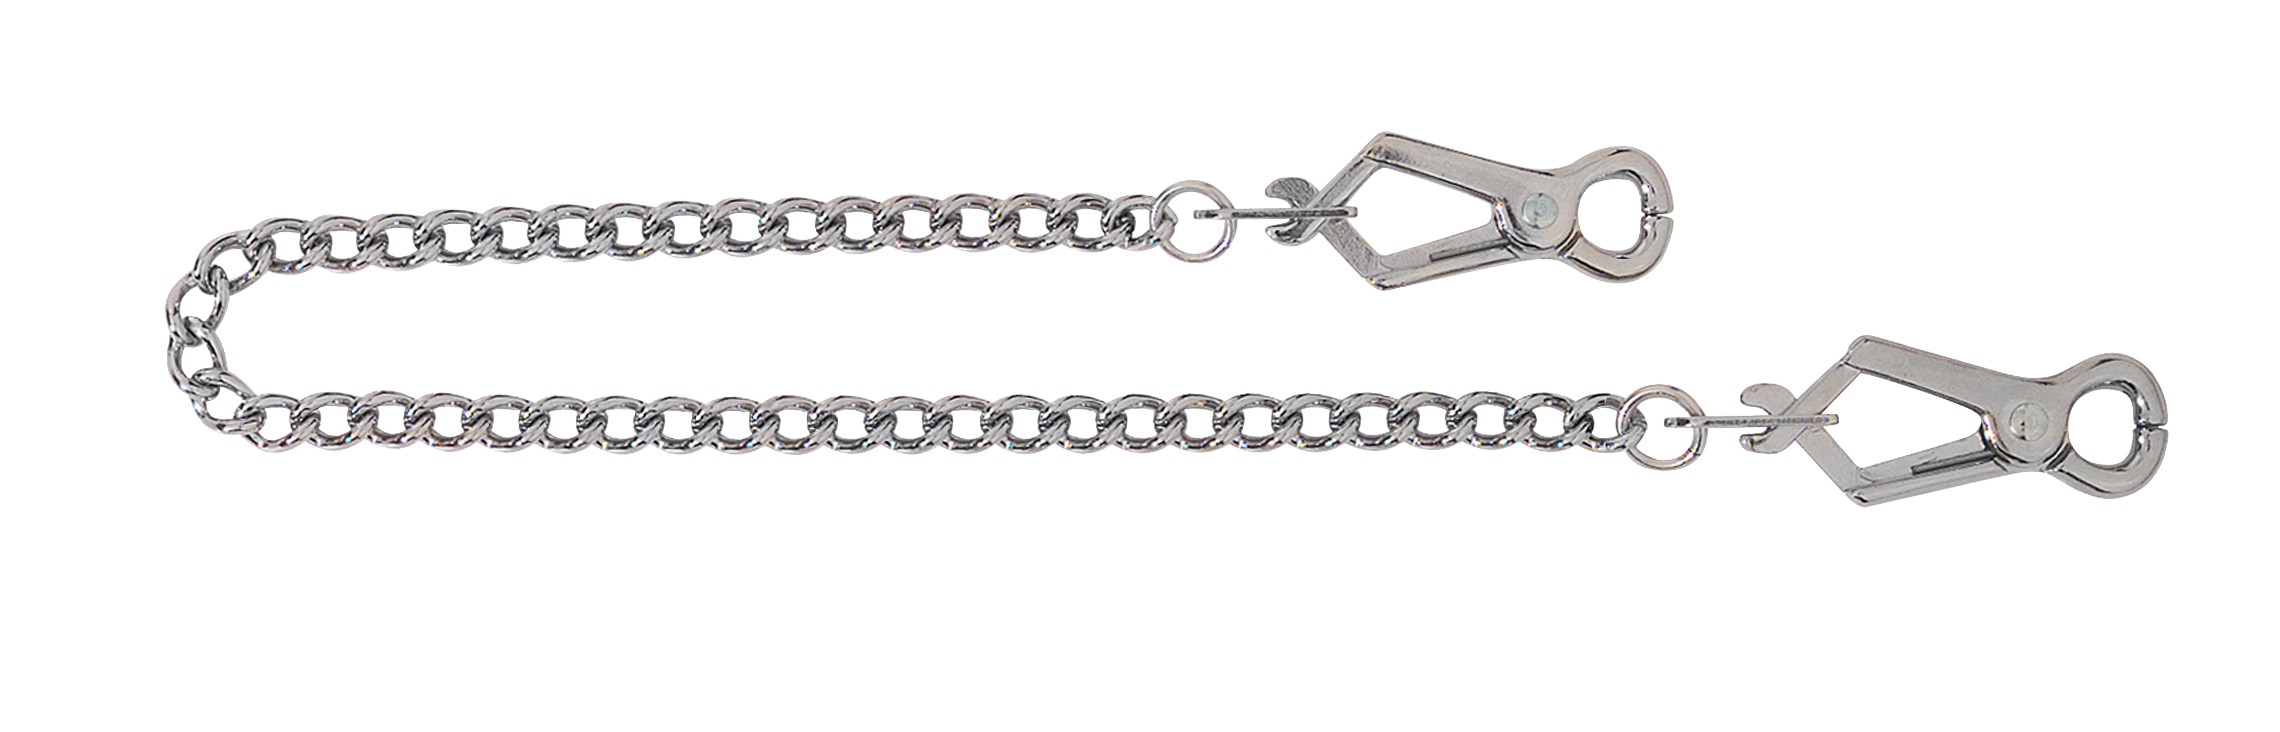 Endurance Pierced Clamps - Link Chain